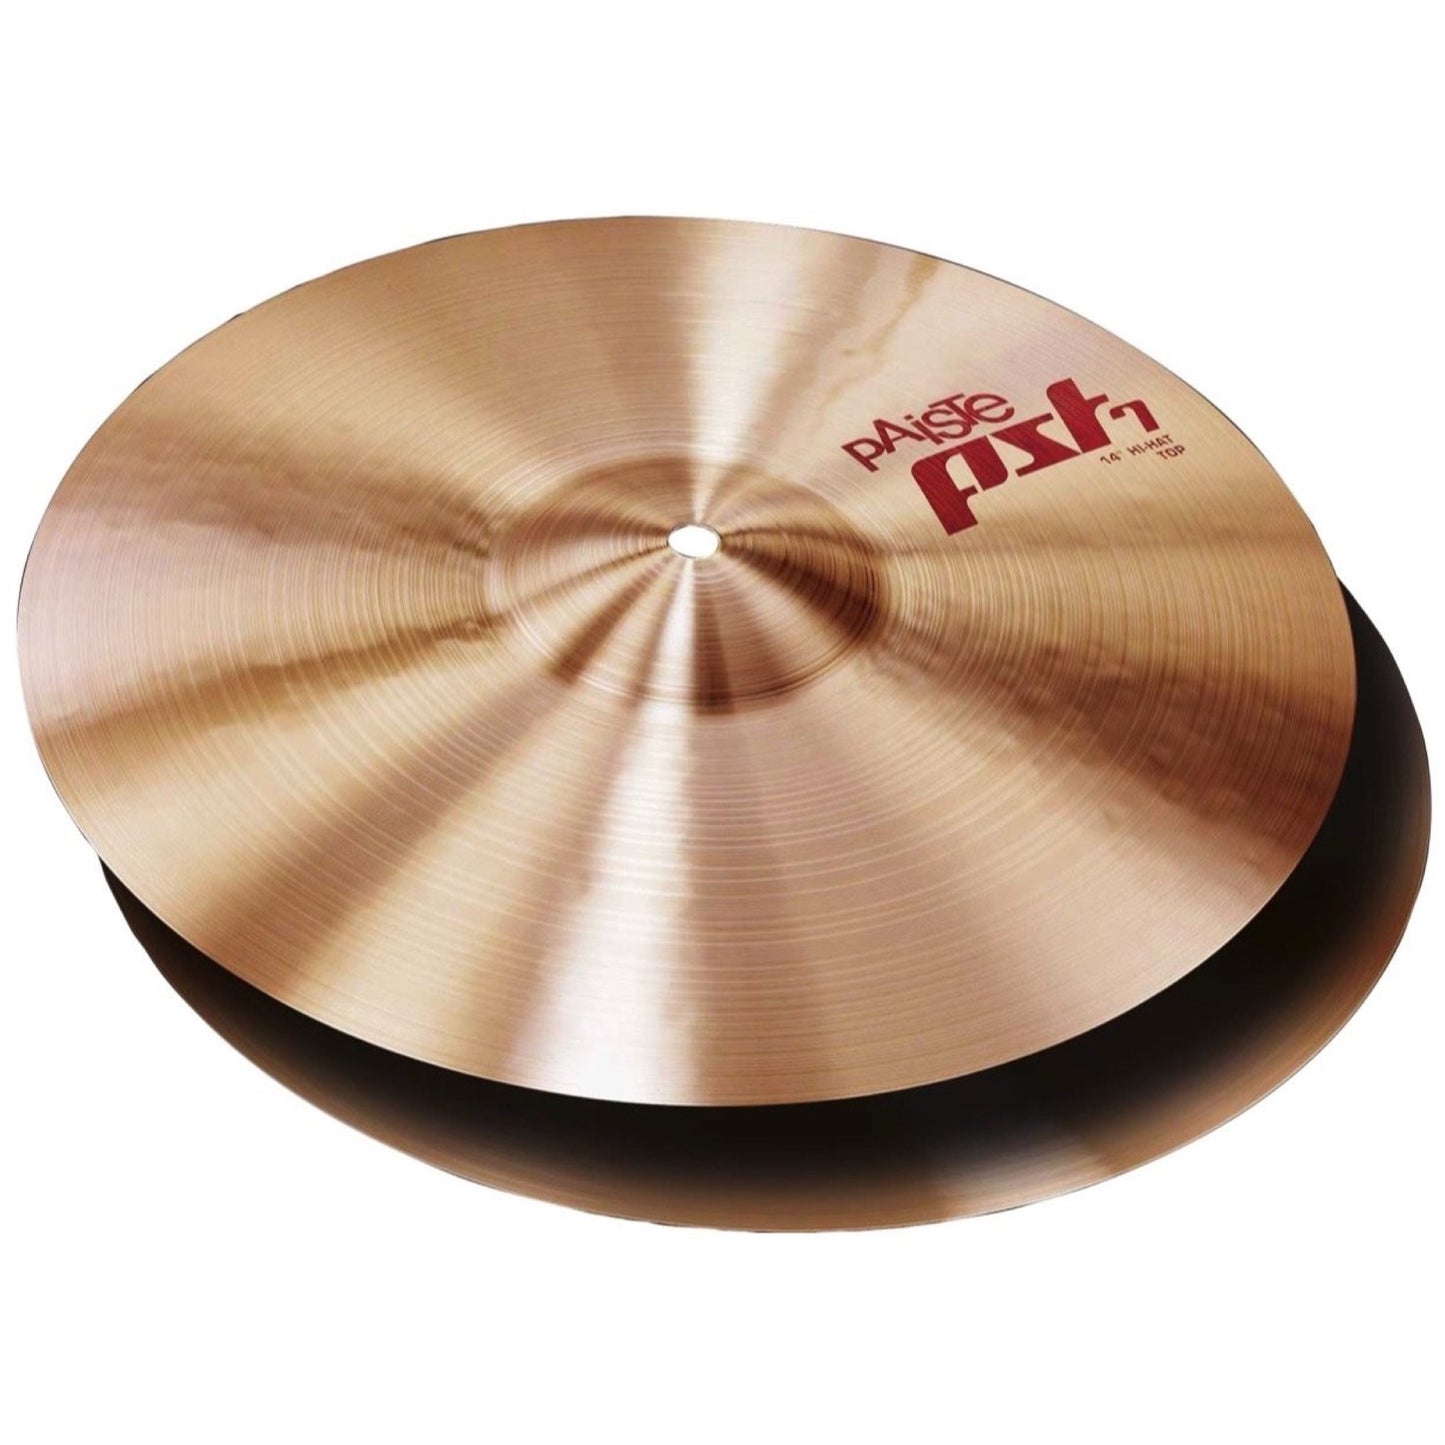 Paiste PST 7 Hi-Hat Cymbals, 14 Inch Pair